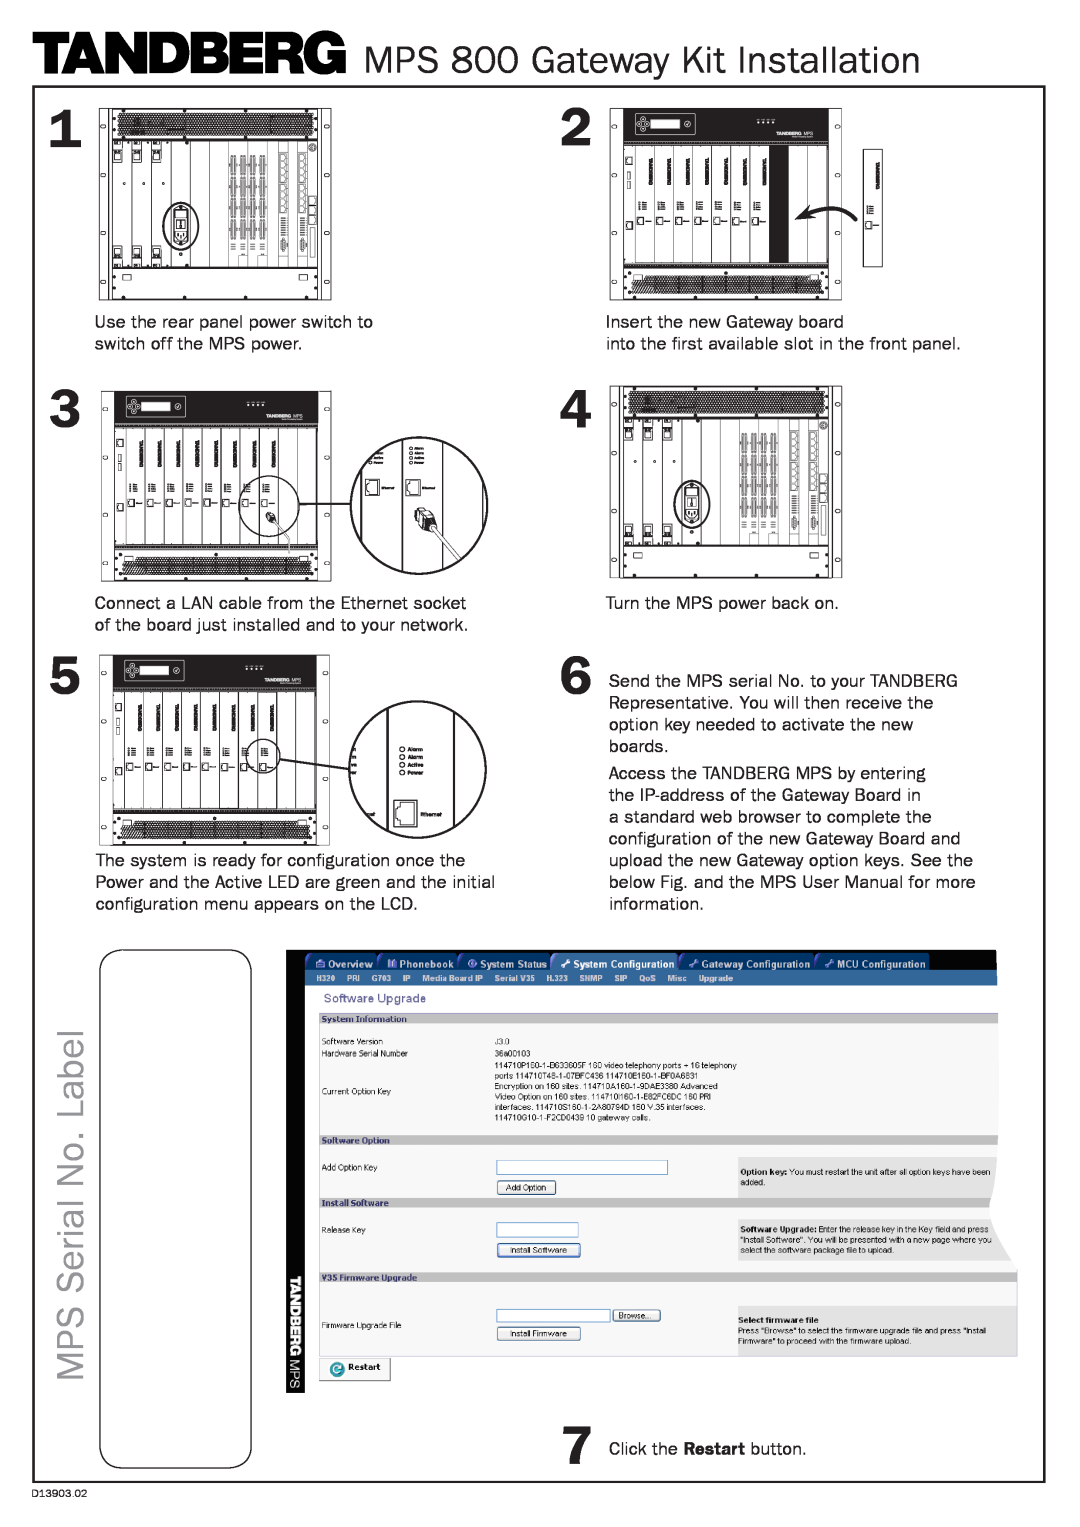 TANDBERG MPS800 user manual MPS 800 Gateway Kit Installation 